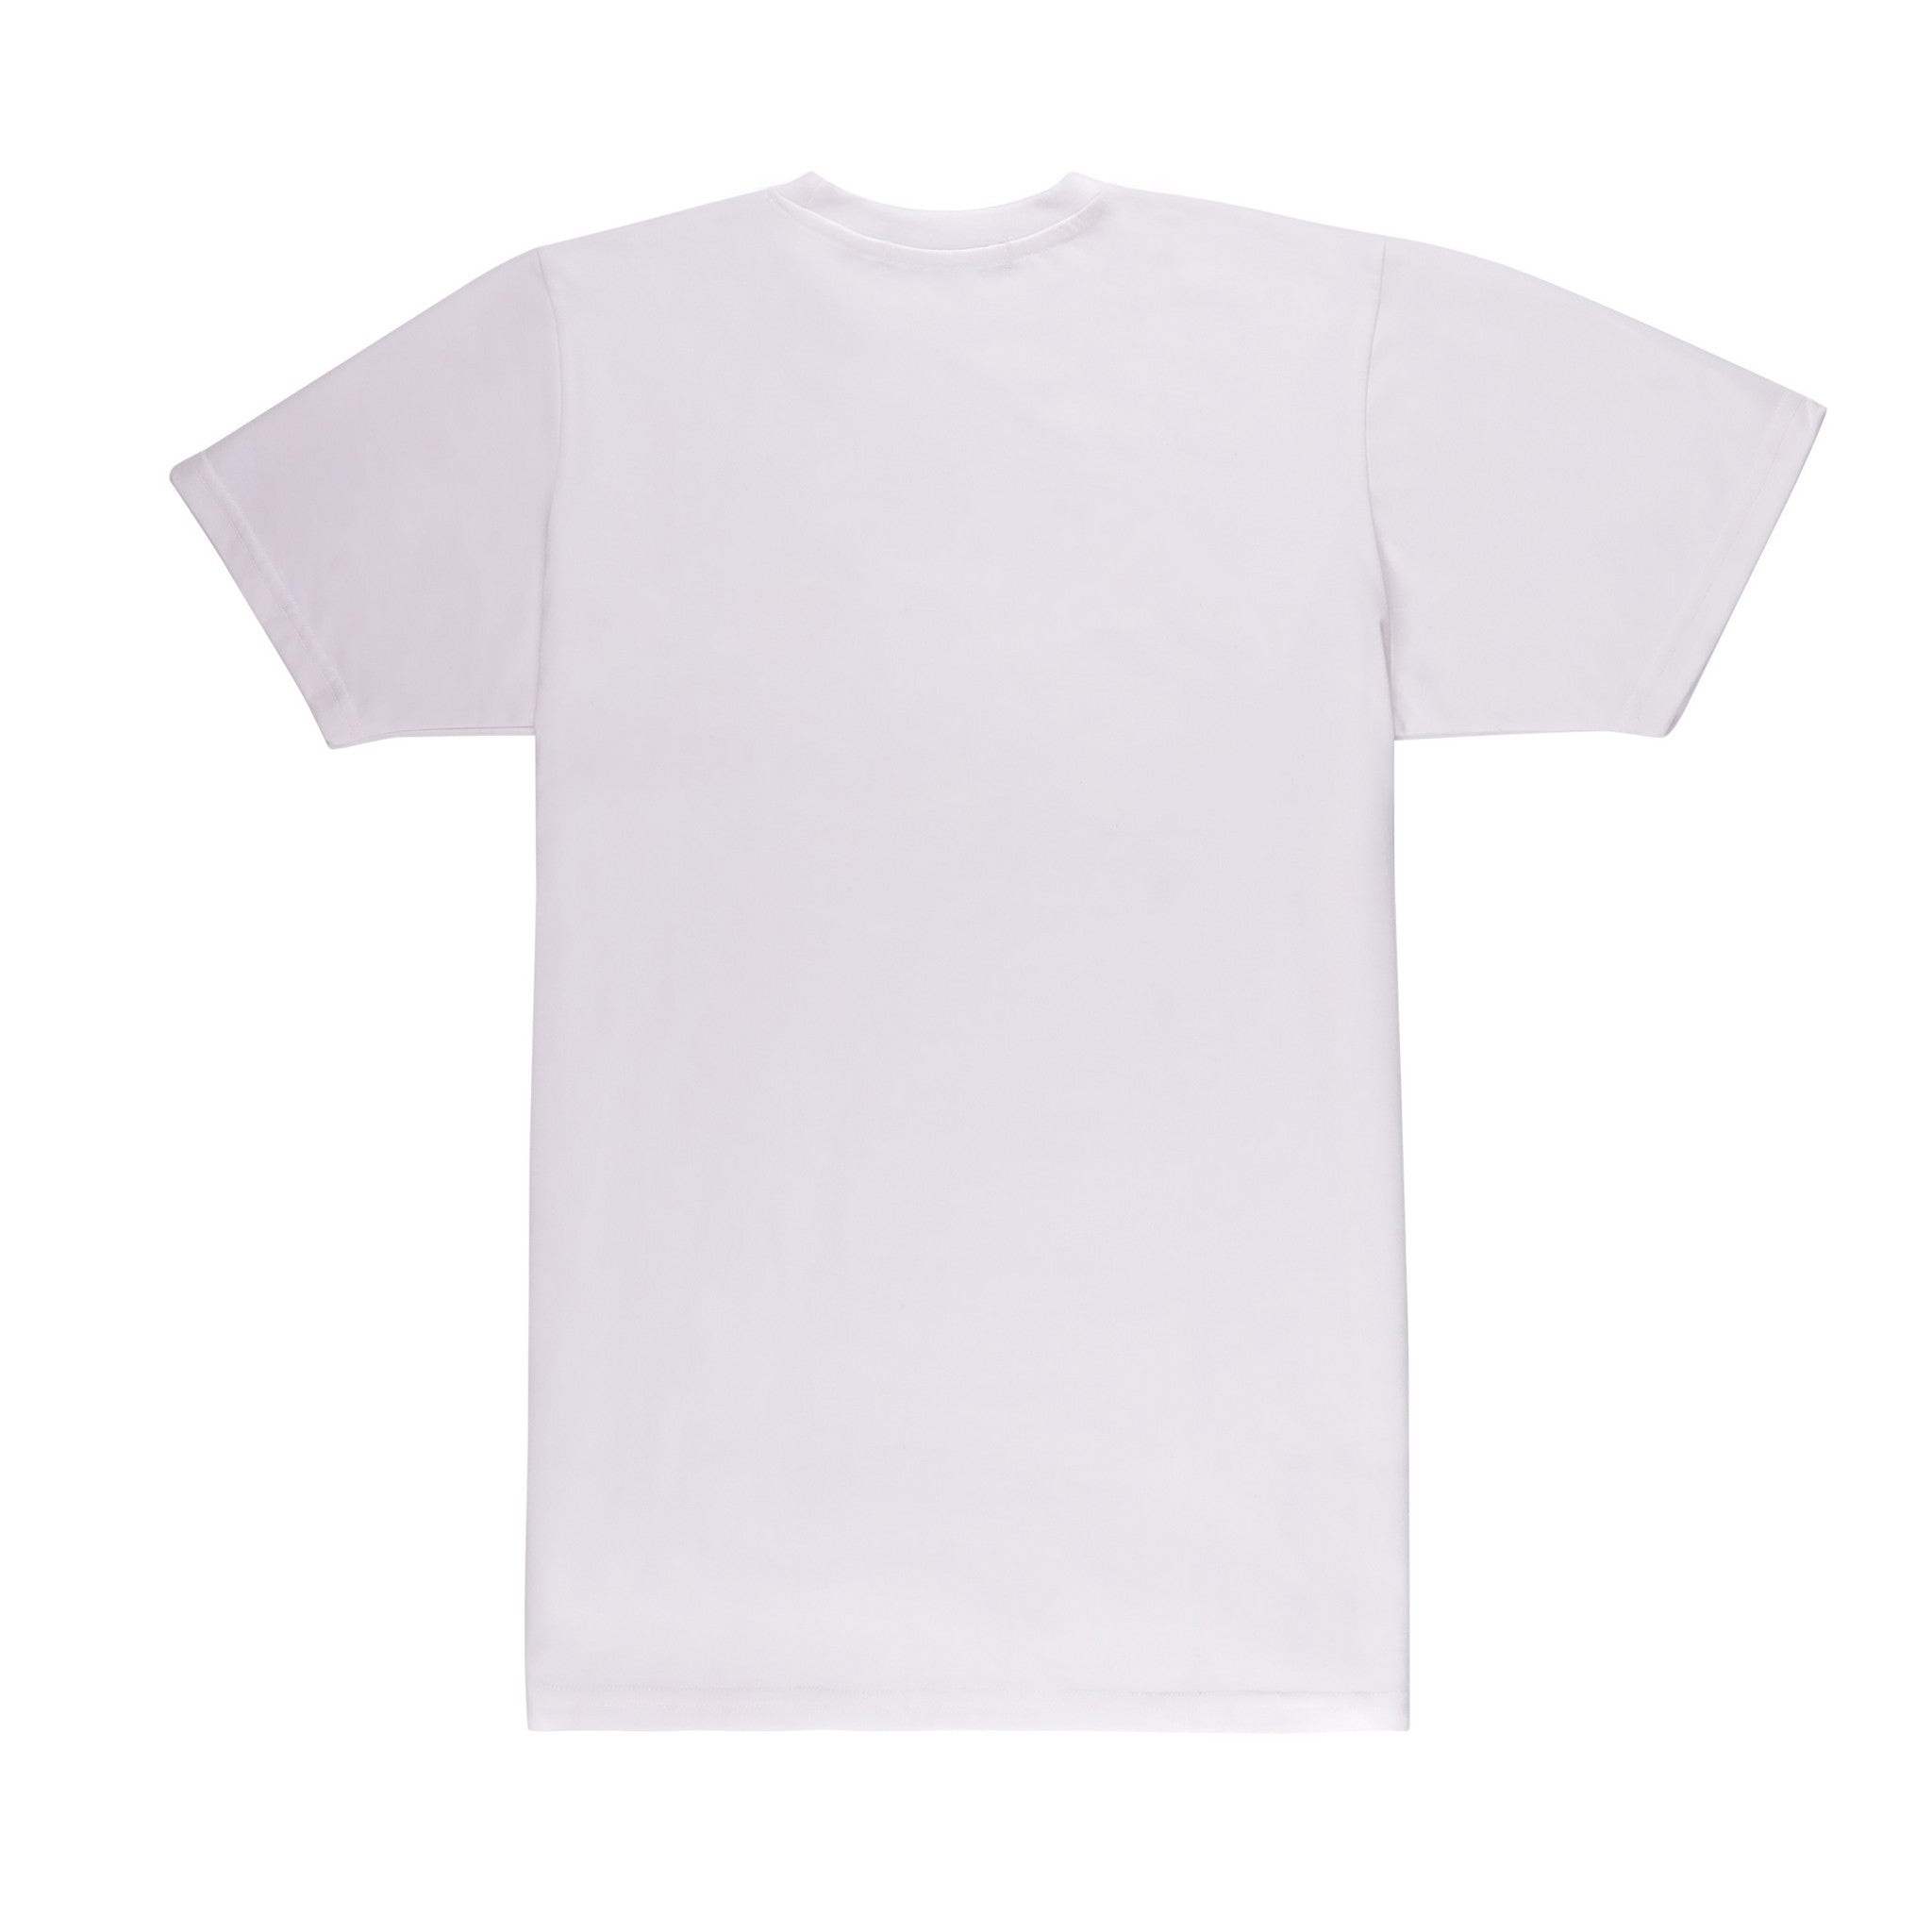 California Print White T-Shirt